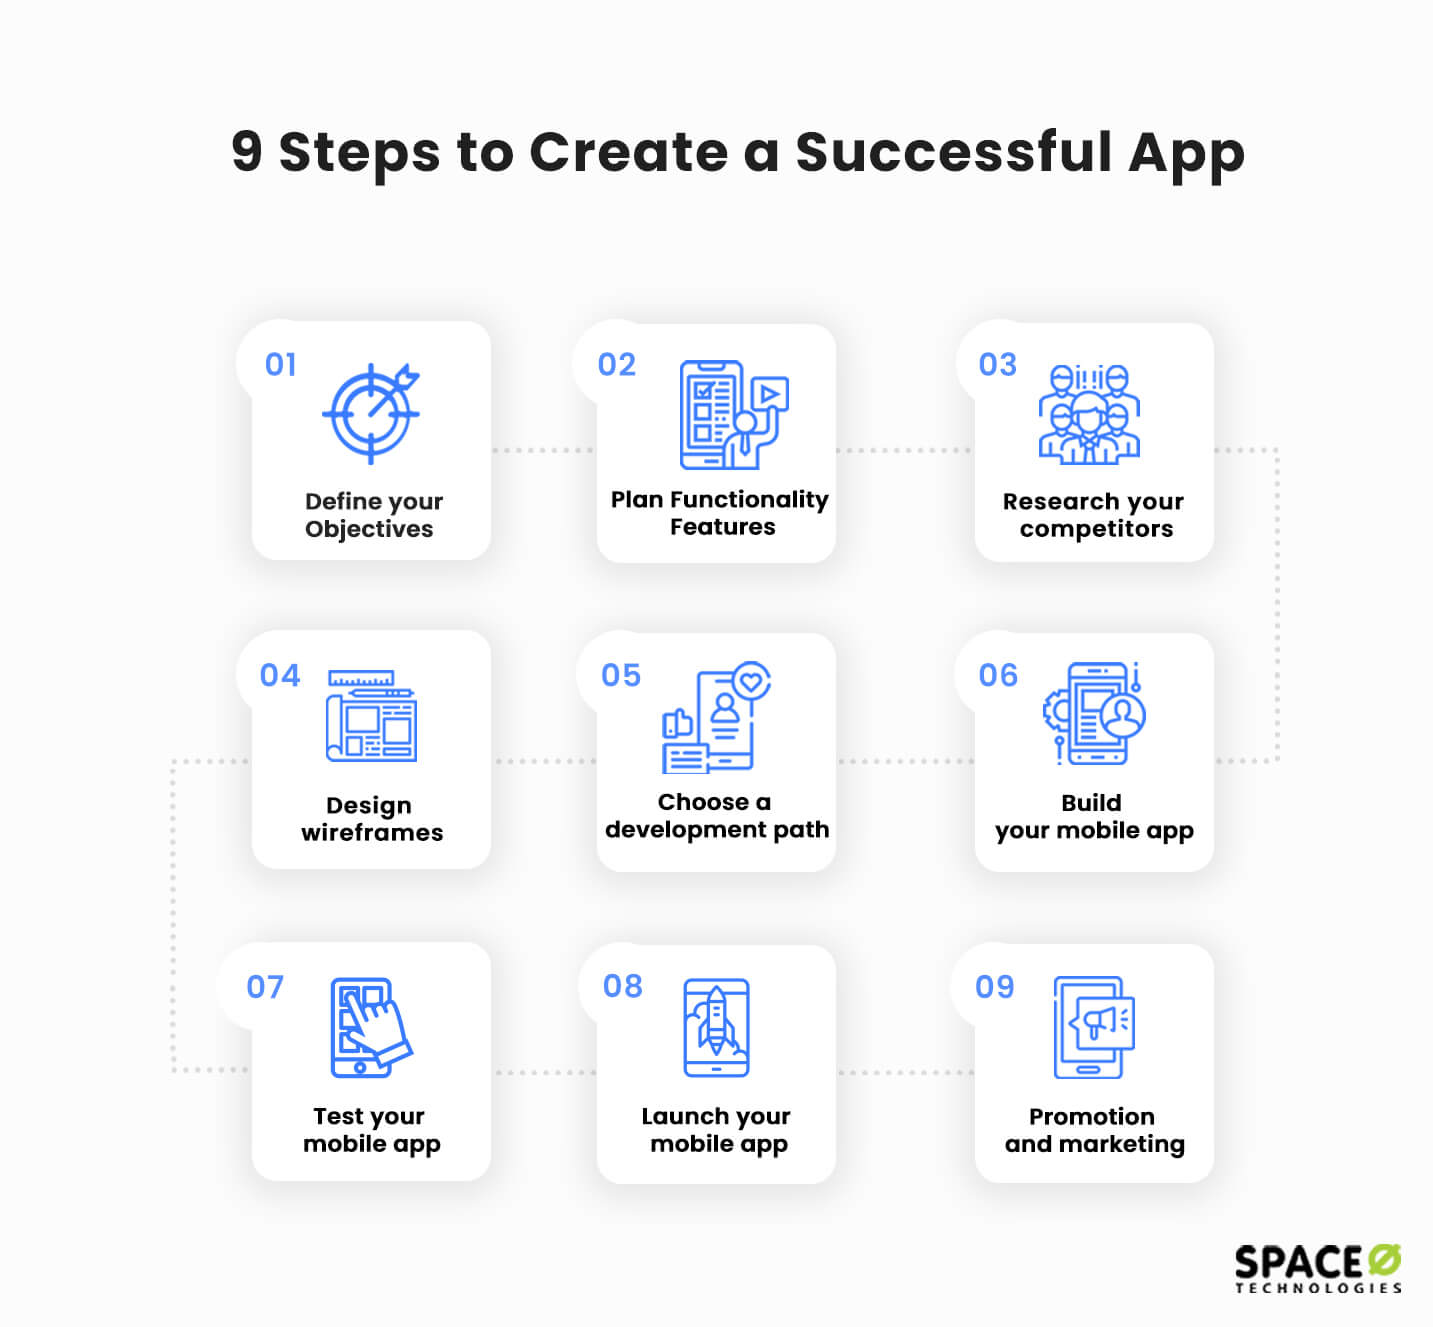 steps to create an app